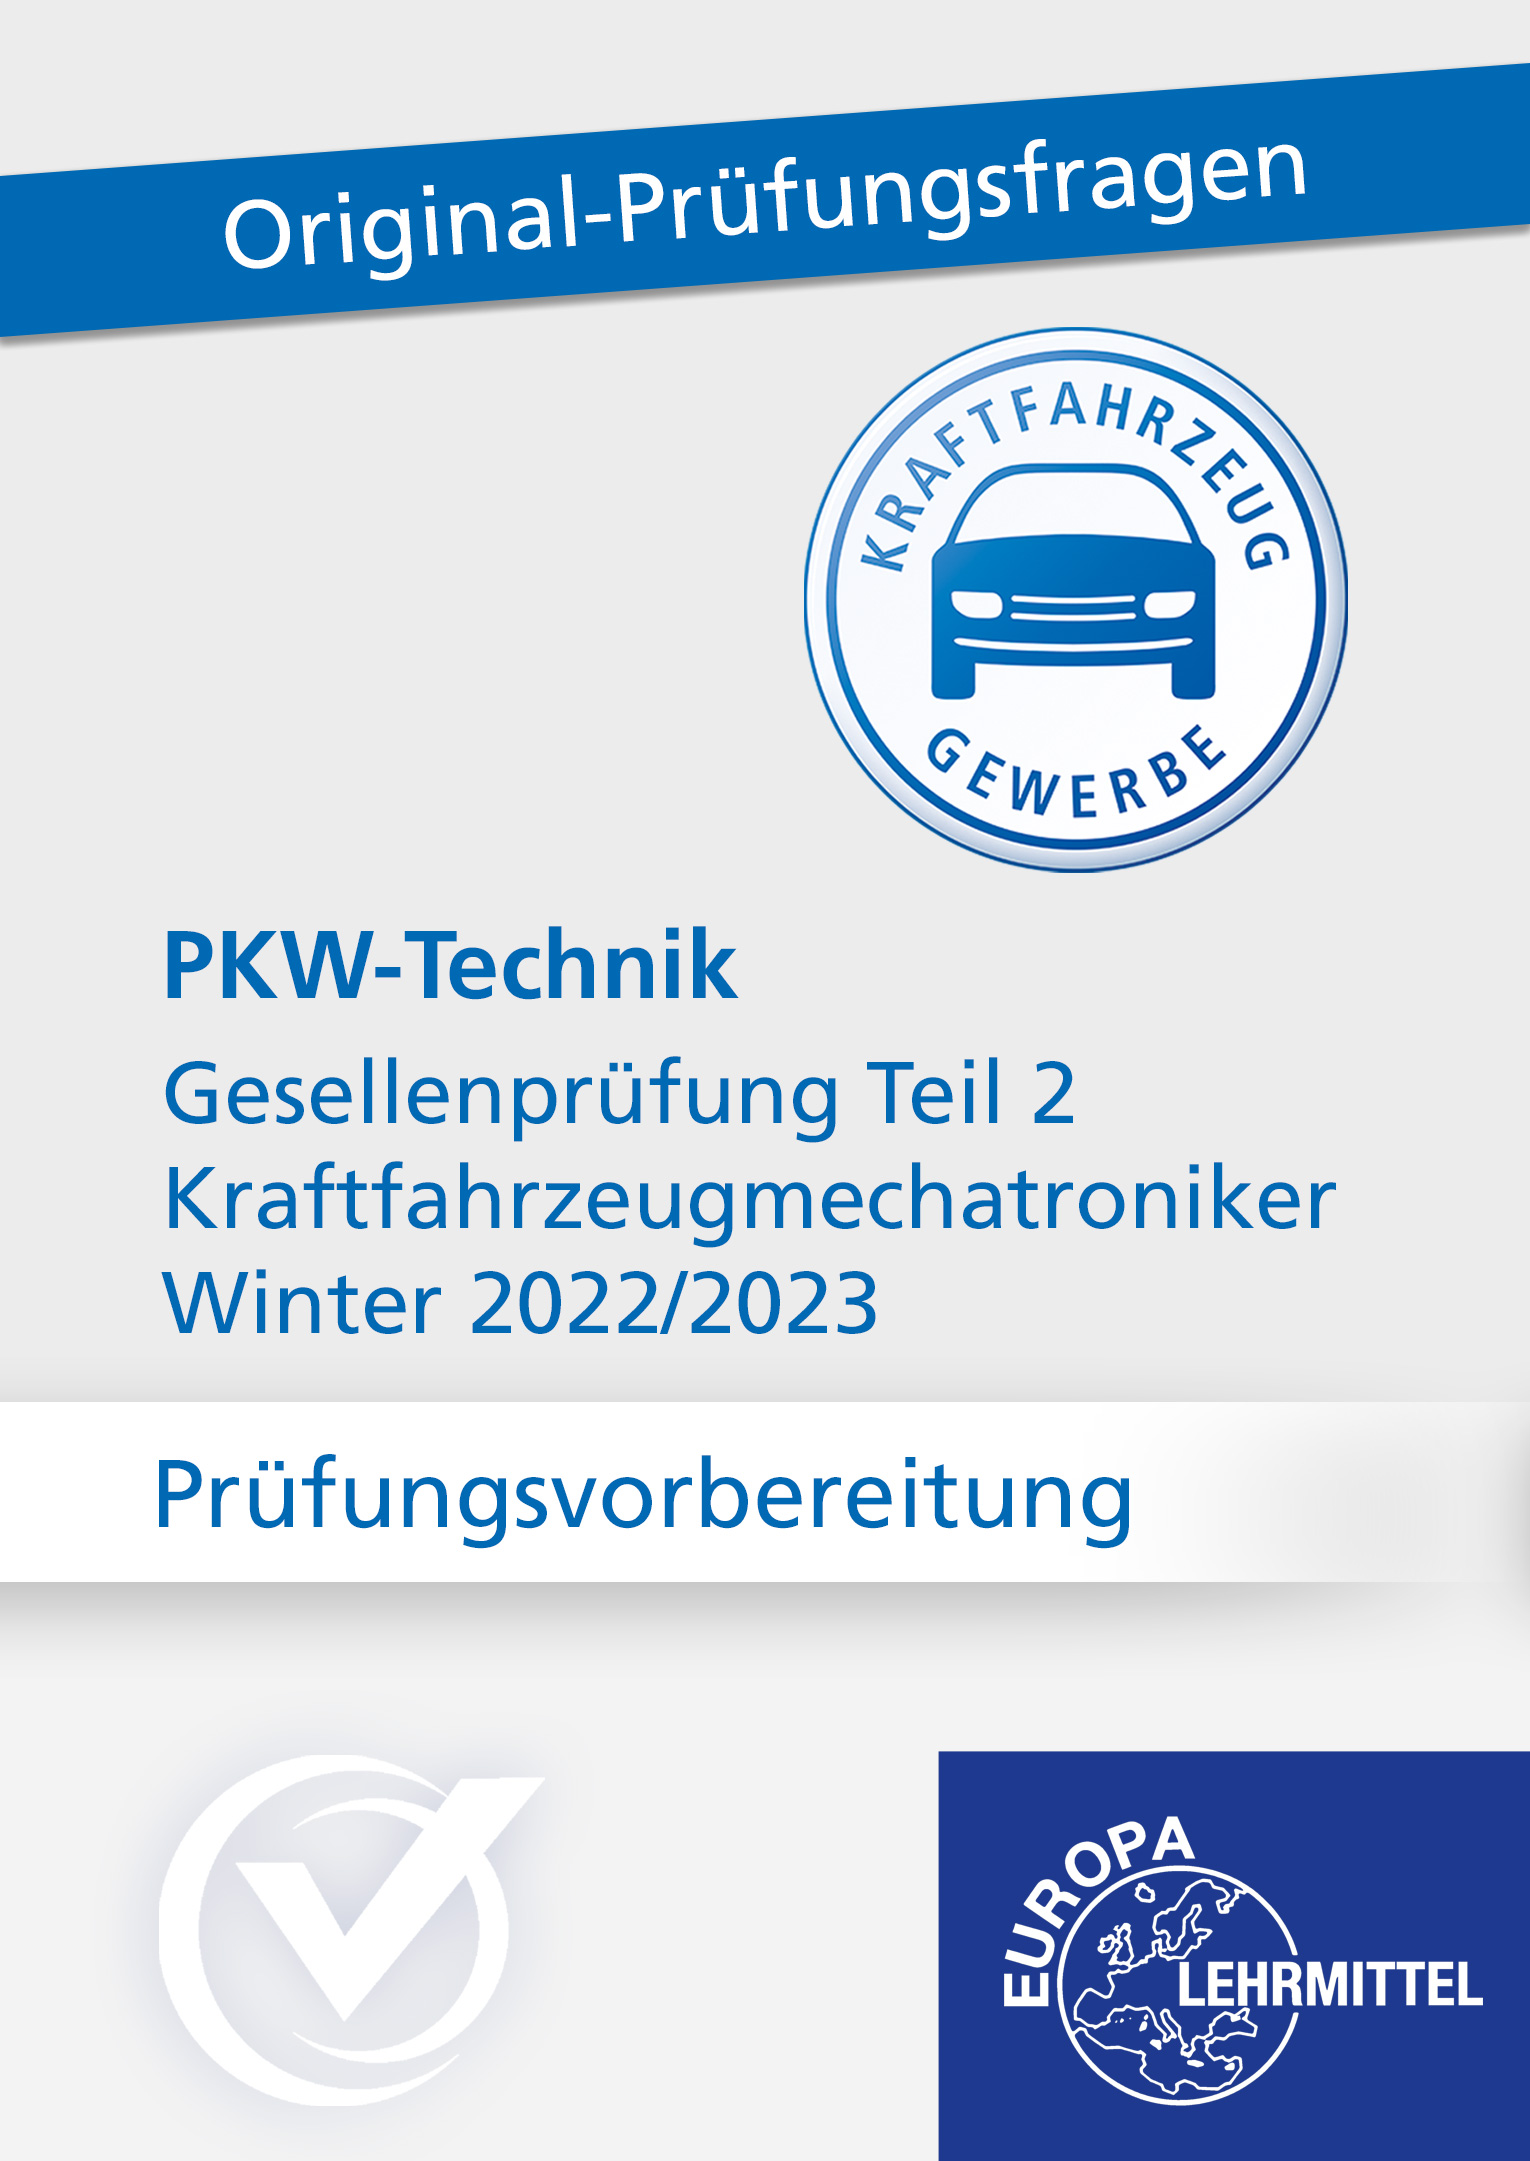 Prüfungsvorbereitung GP Teil 2 PKW-Technik Winter 2022/2023 Online-Kurs